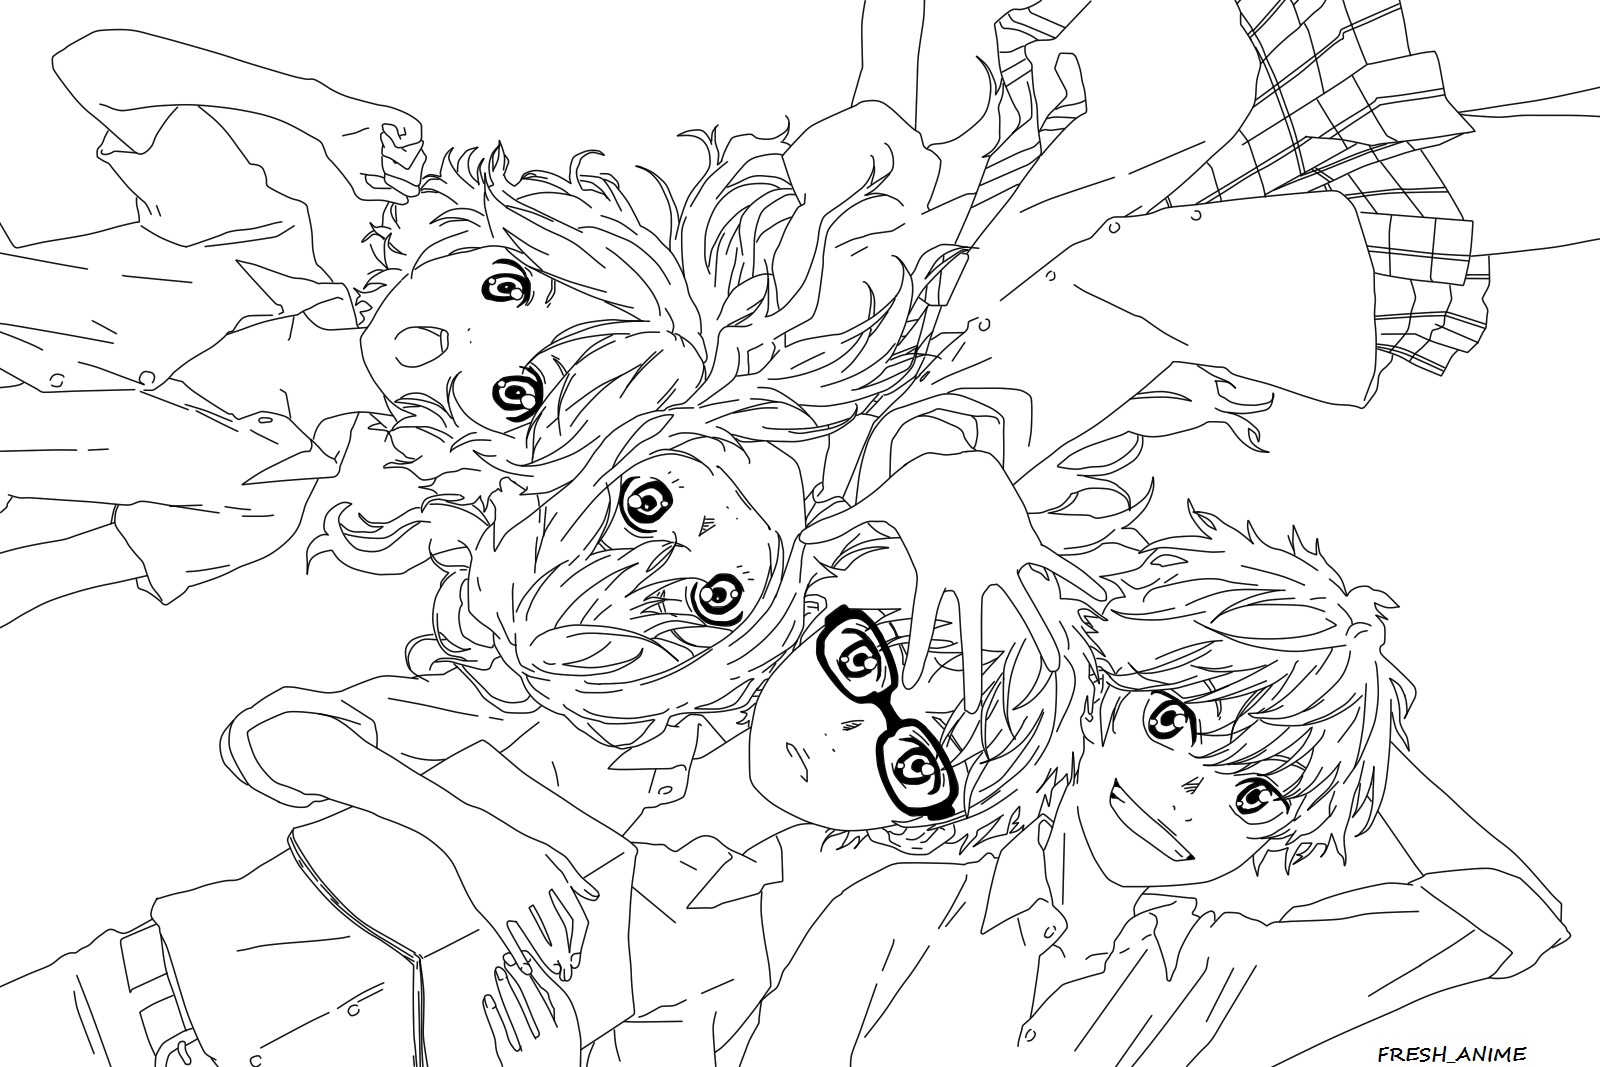 Shigatsu wa Kimi no Uso 44 English  Your lie in april, Anime wall art,  Manga pages